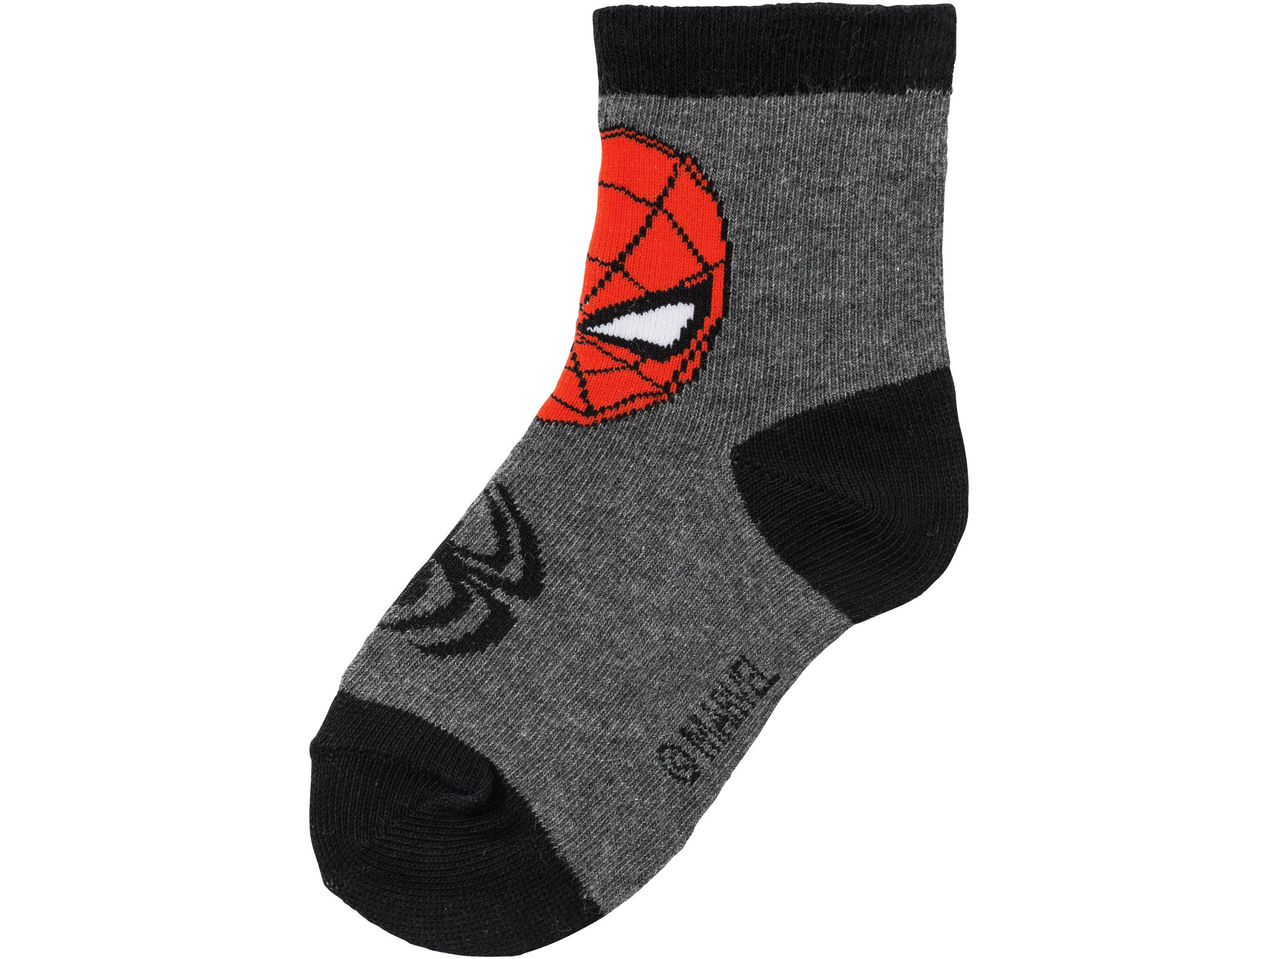 Kids' Socks, 2 pairs